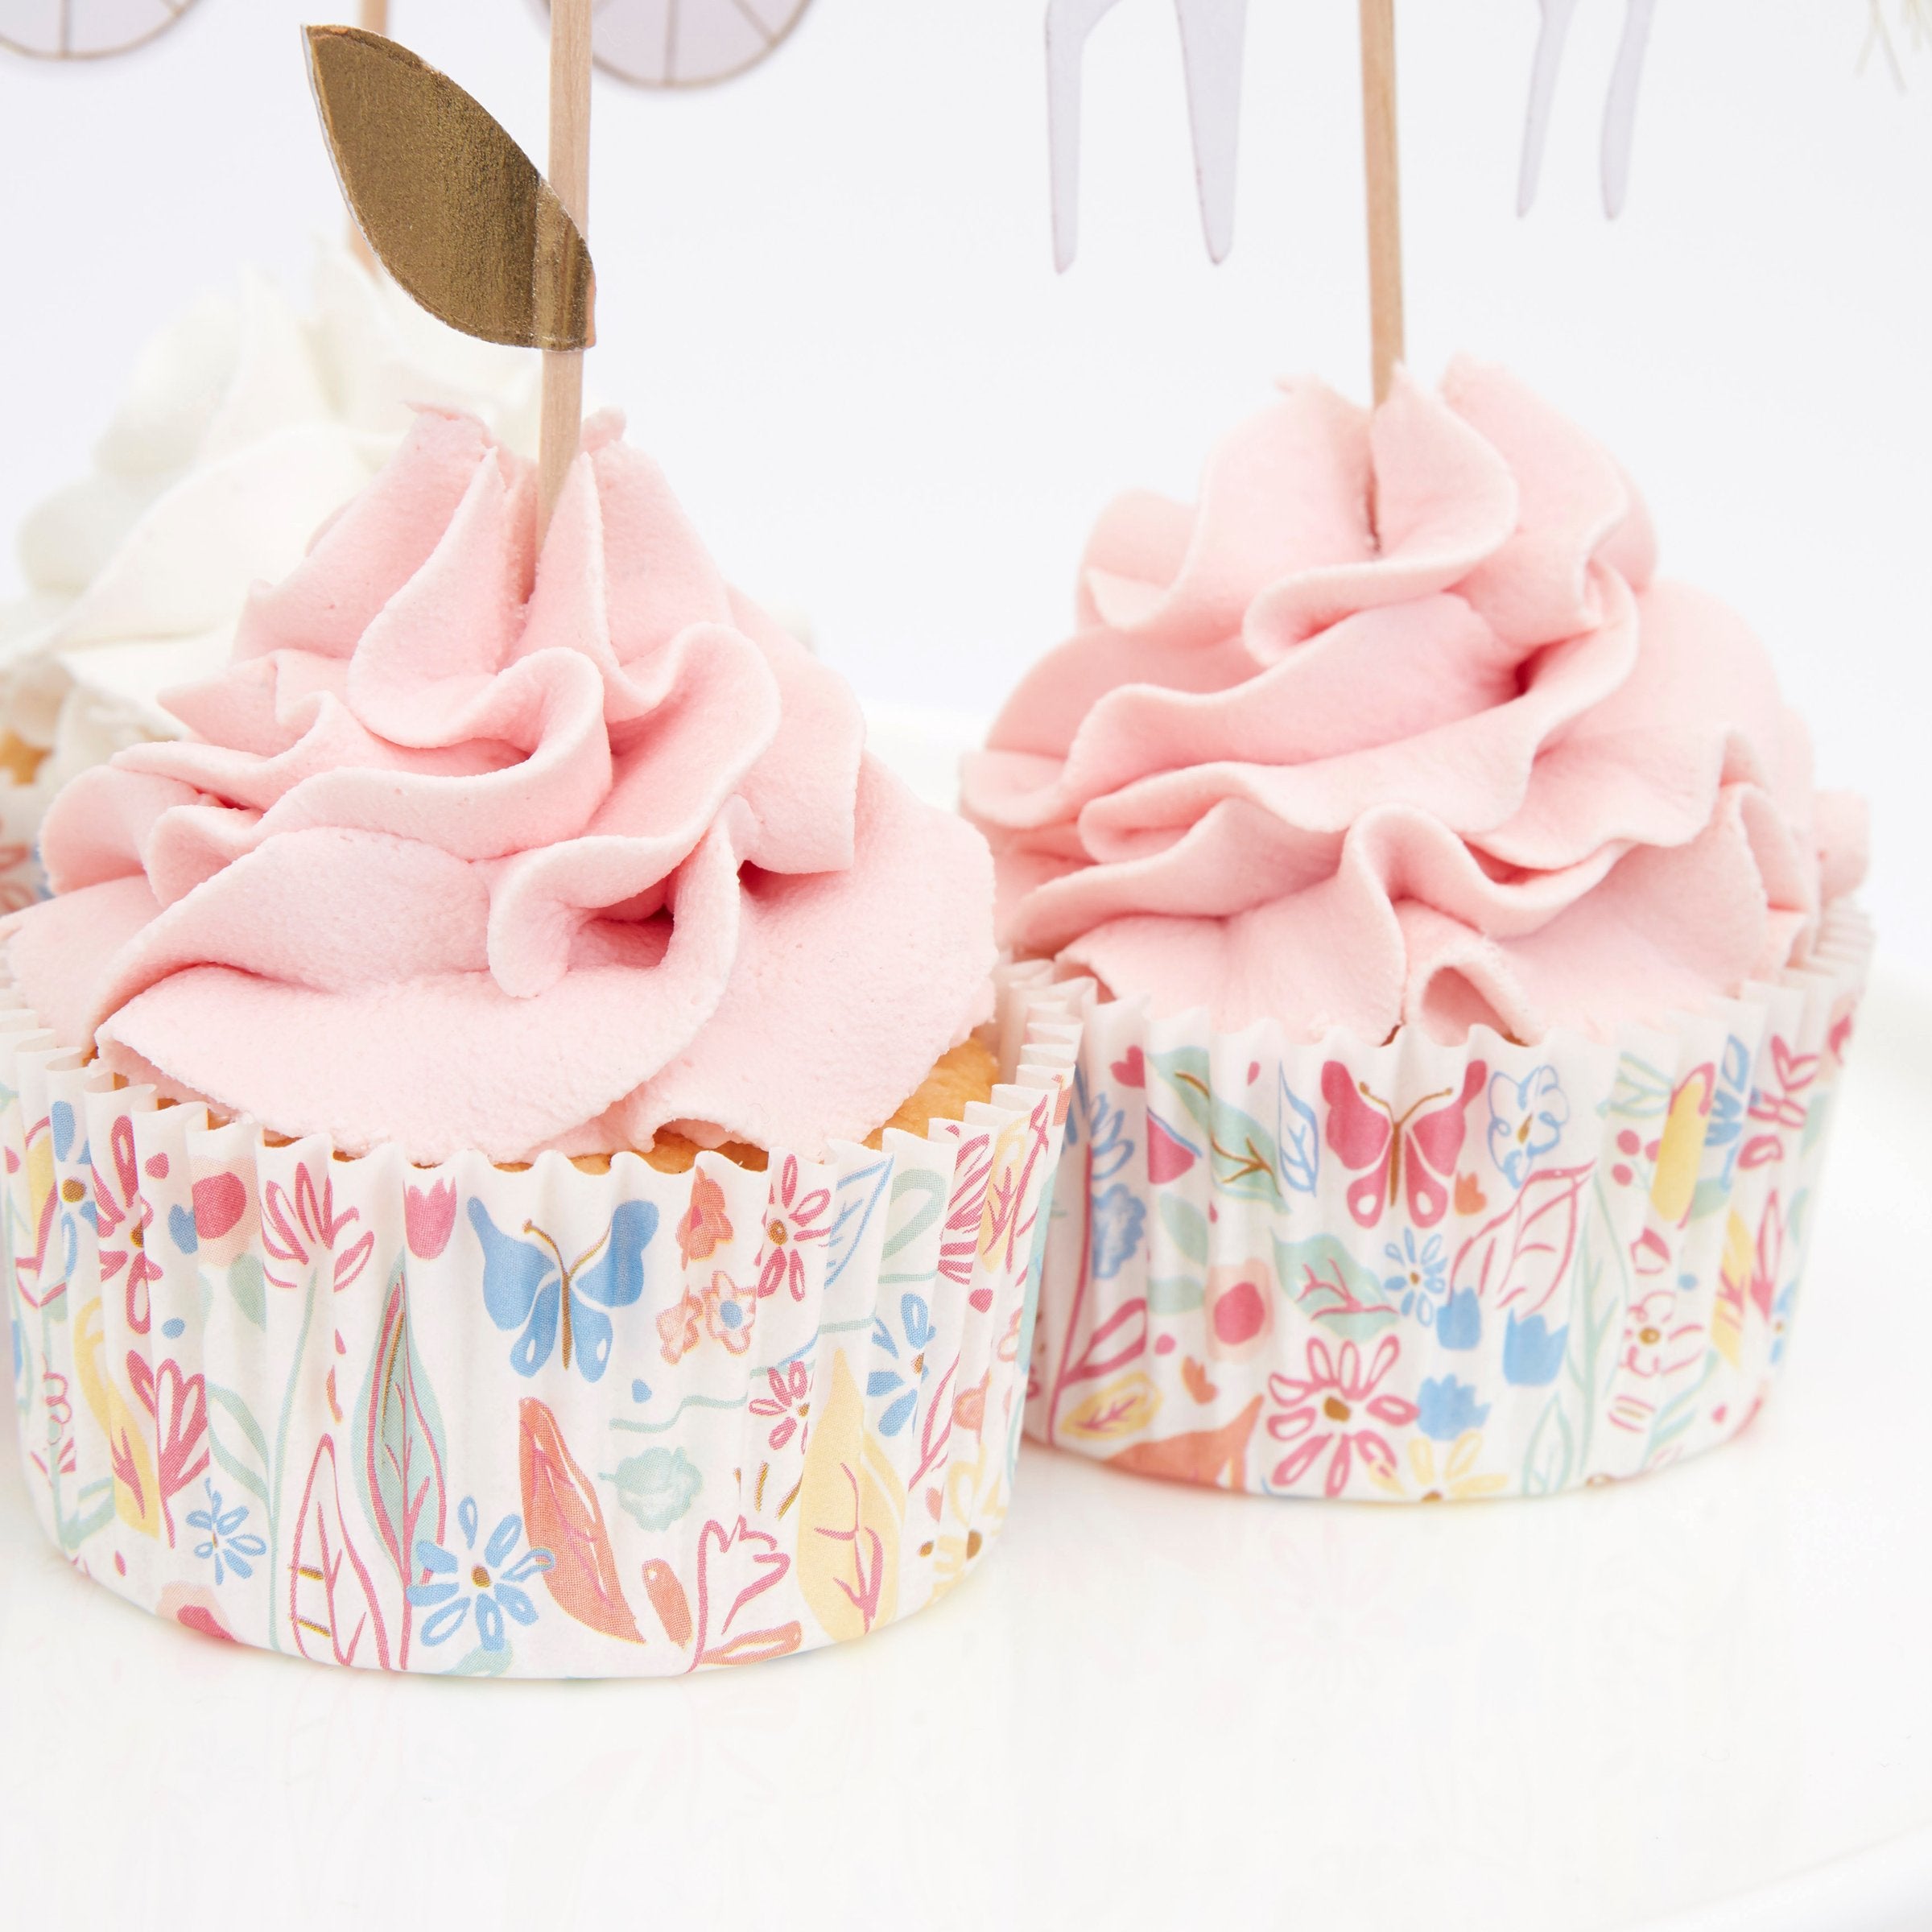 Disney Princesses Cupcakes - YouTube